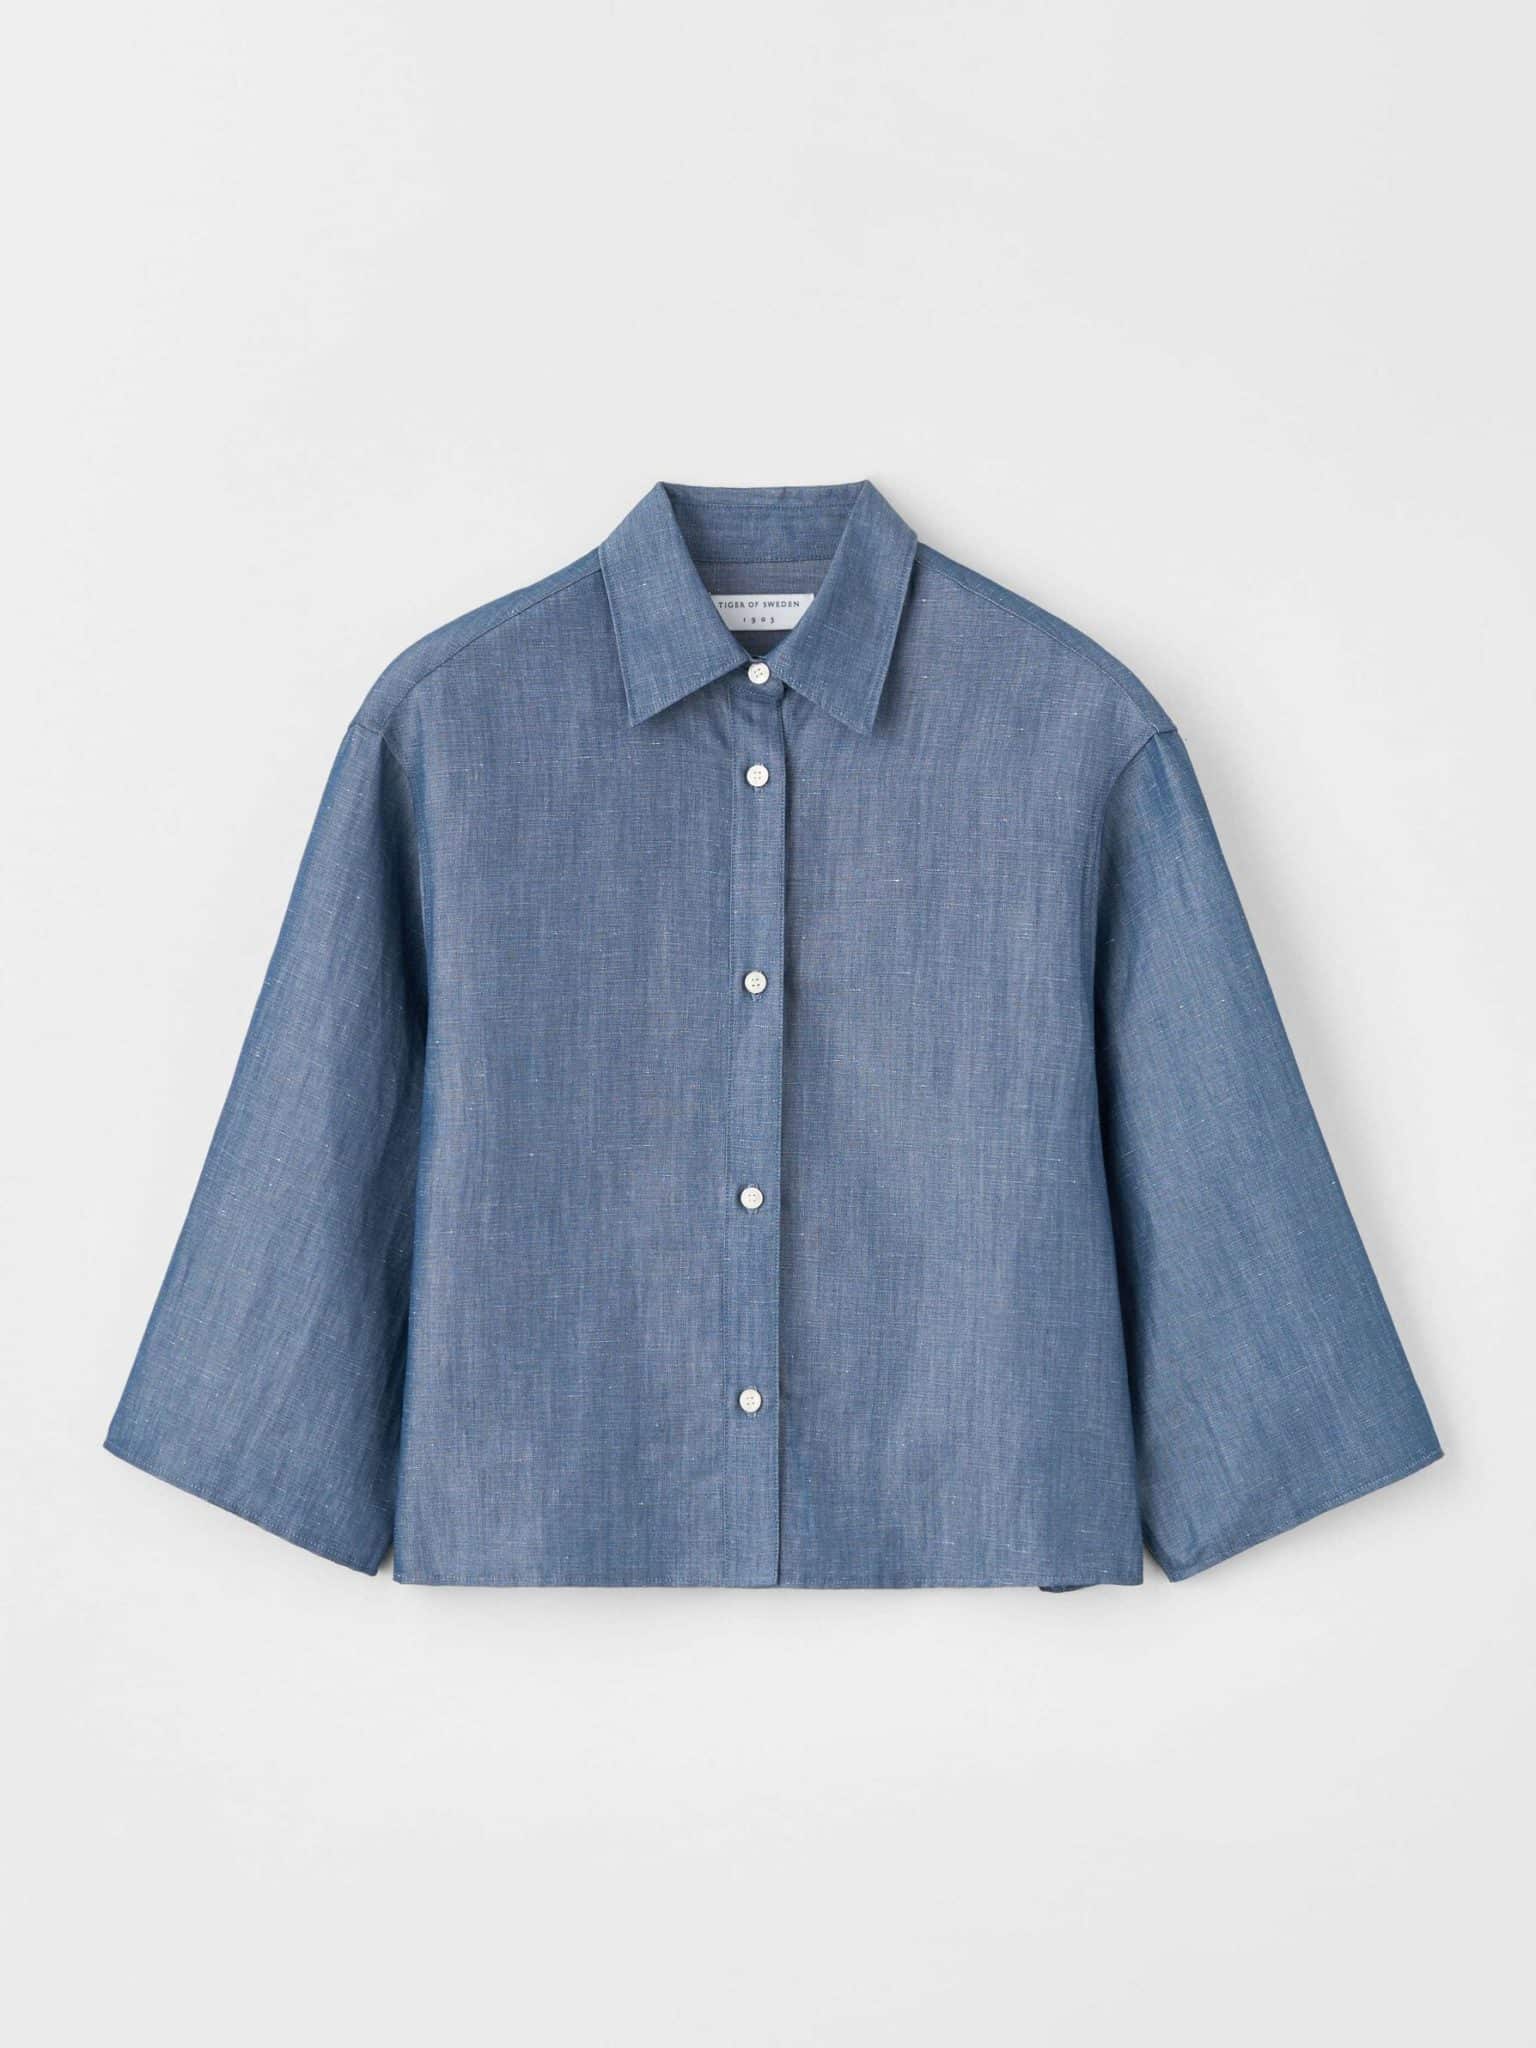 Buy Tiger of Sweden Corins Shirt Blue - Scandinavian Fashion Store